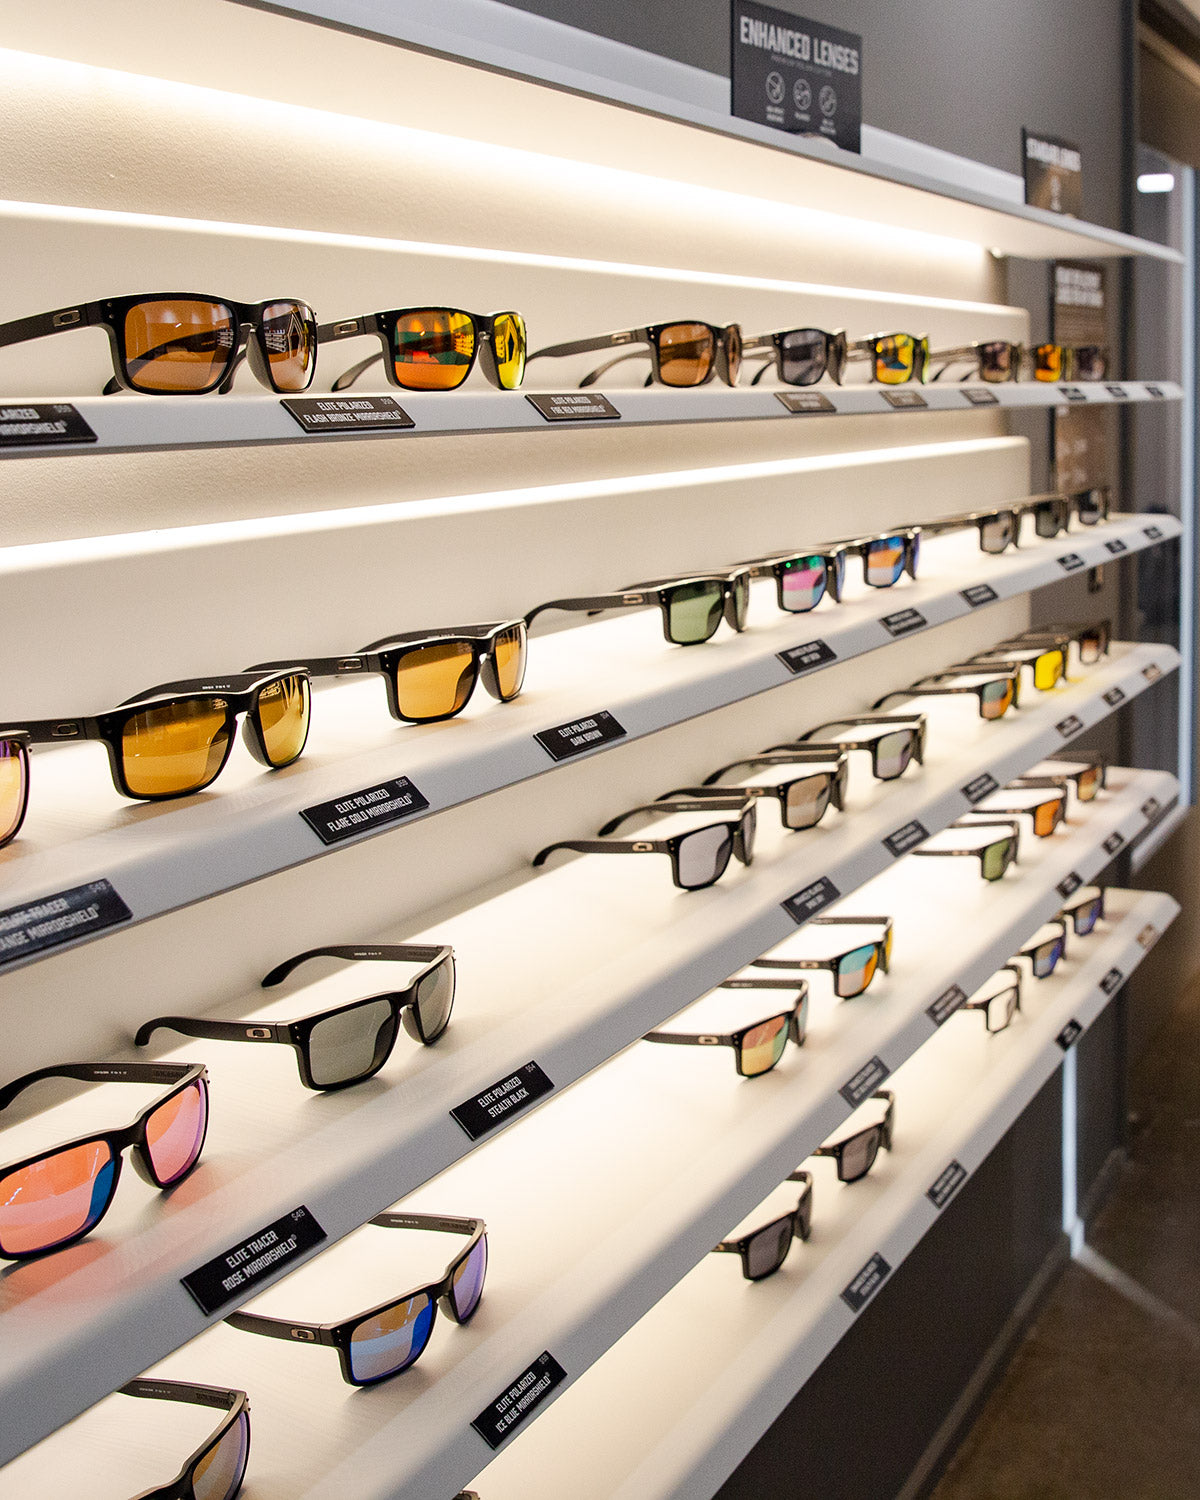 revant replacement lenses in sunglasses sitting on shelves